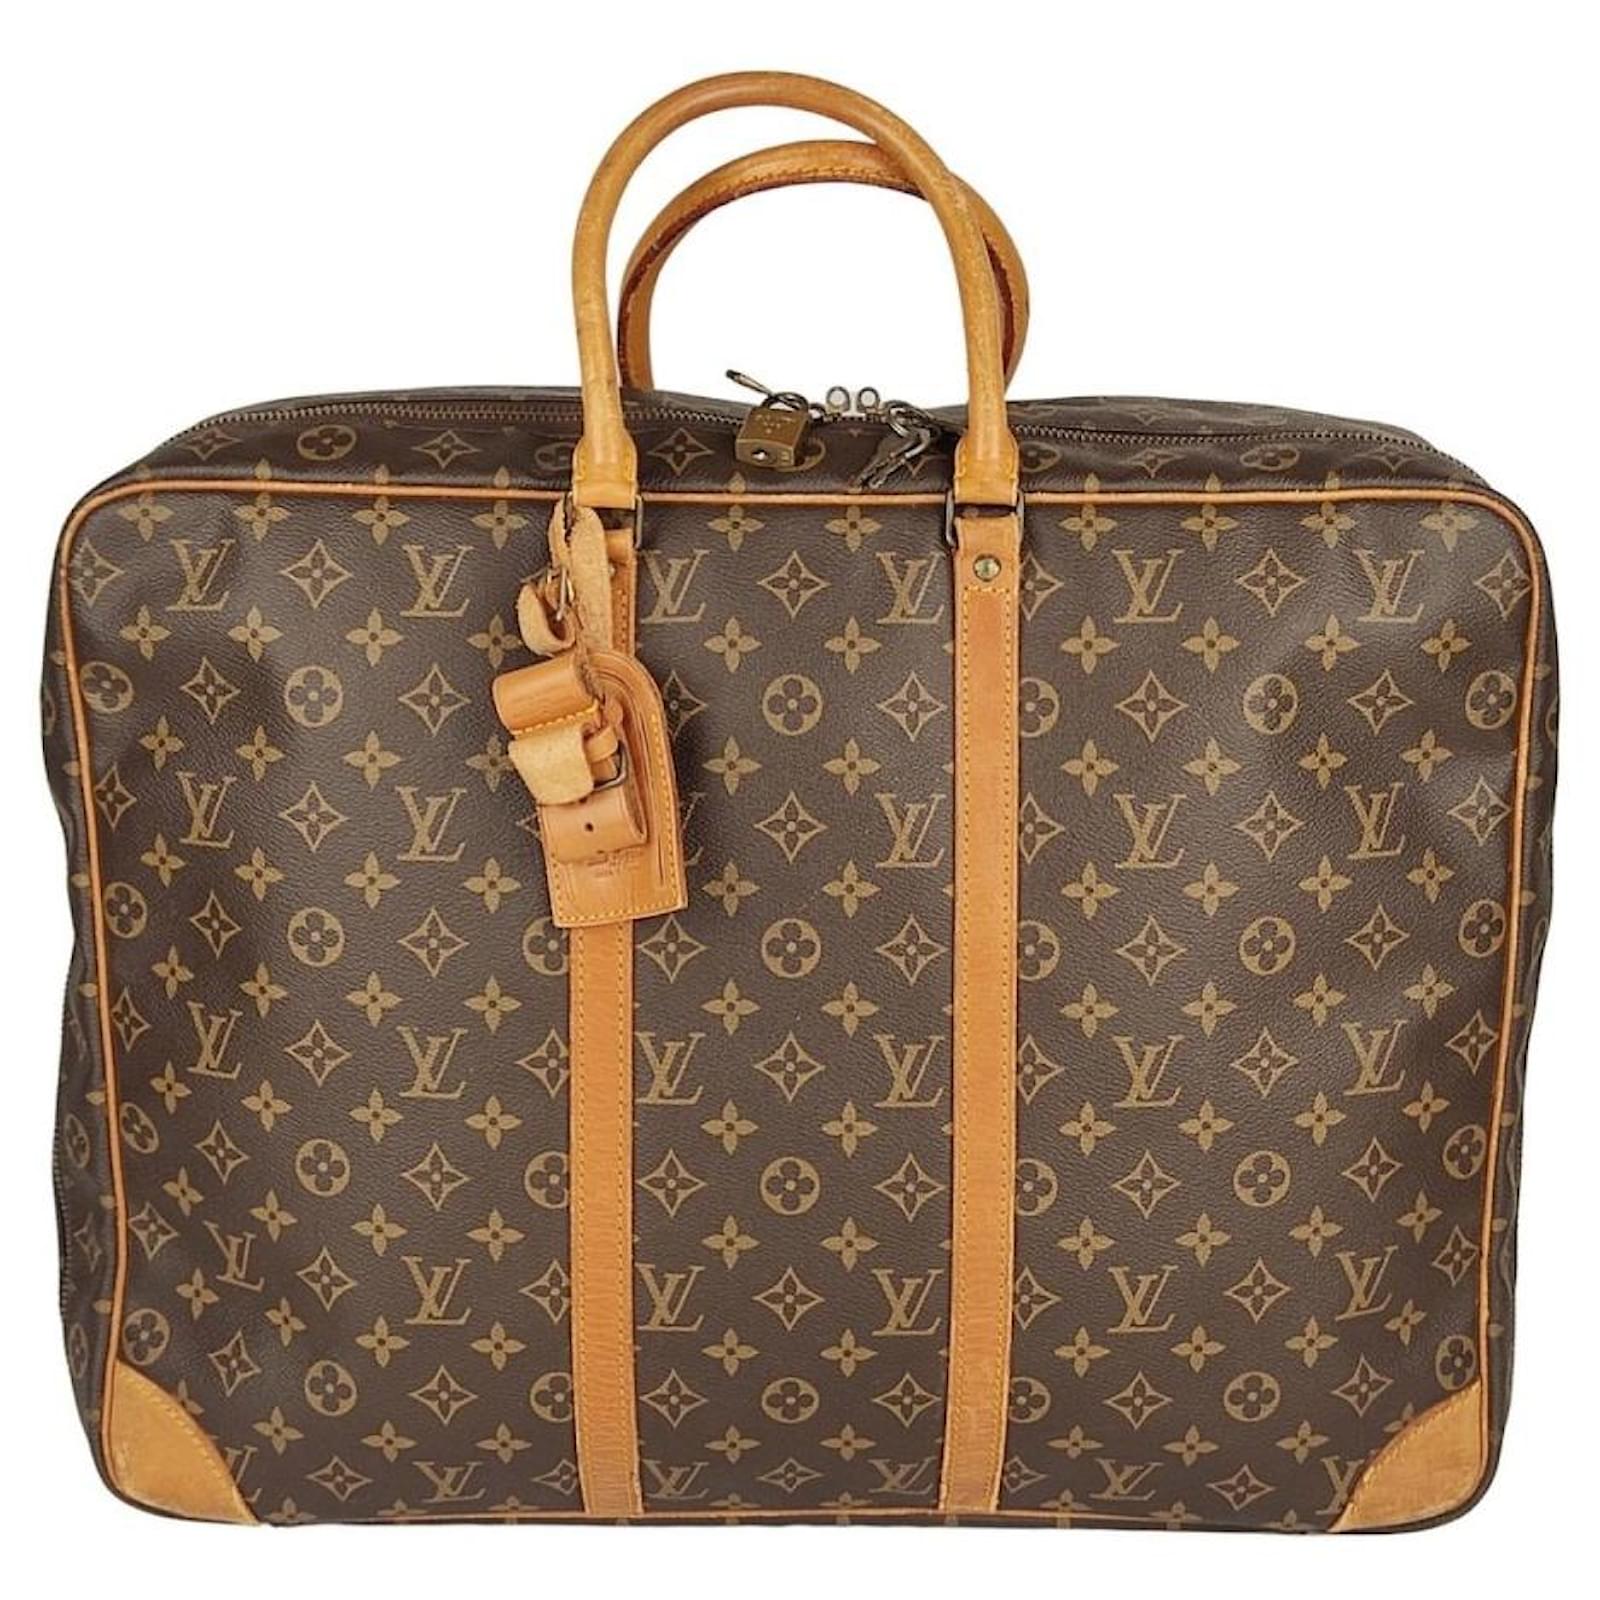 Louis Vuitton Sirius 50 Monogram Canvas Travel Bag on SALE